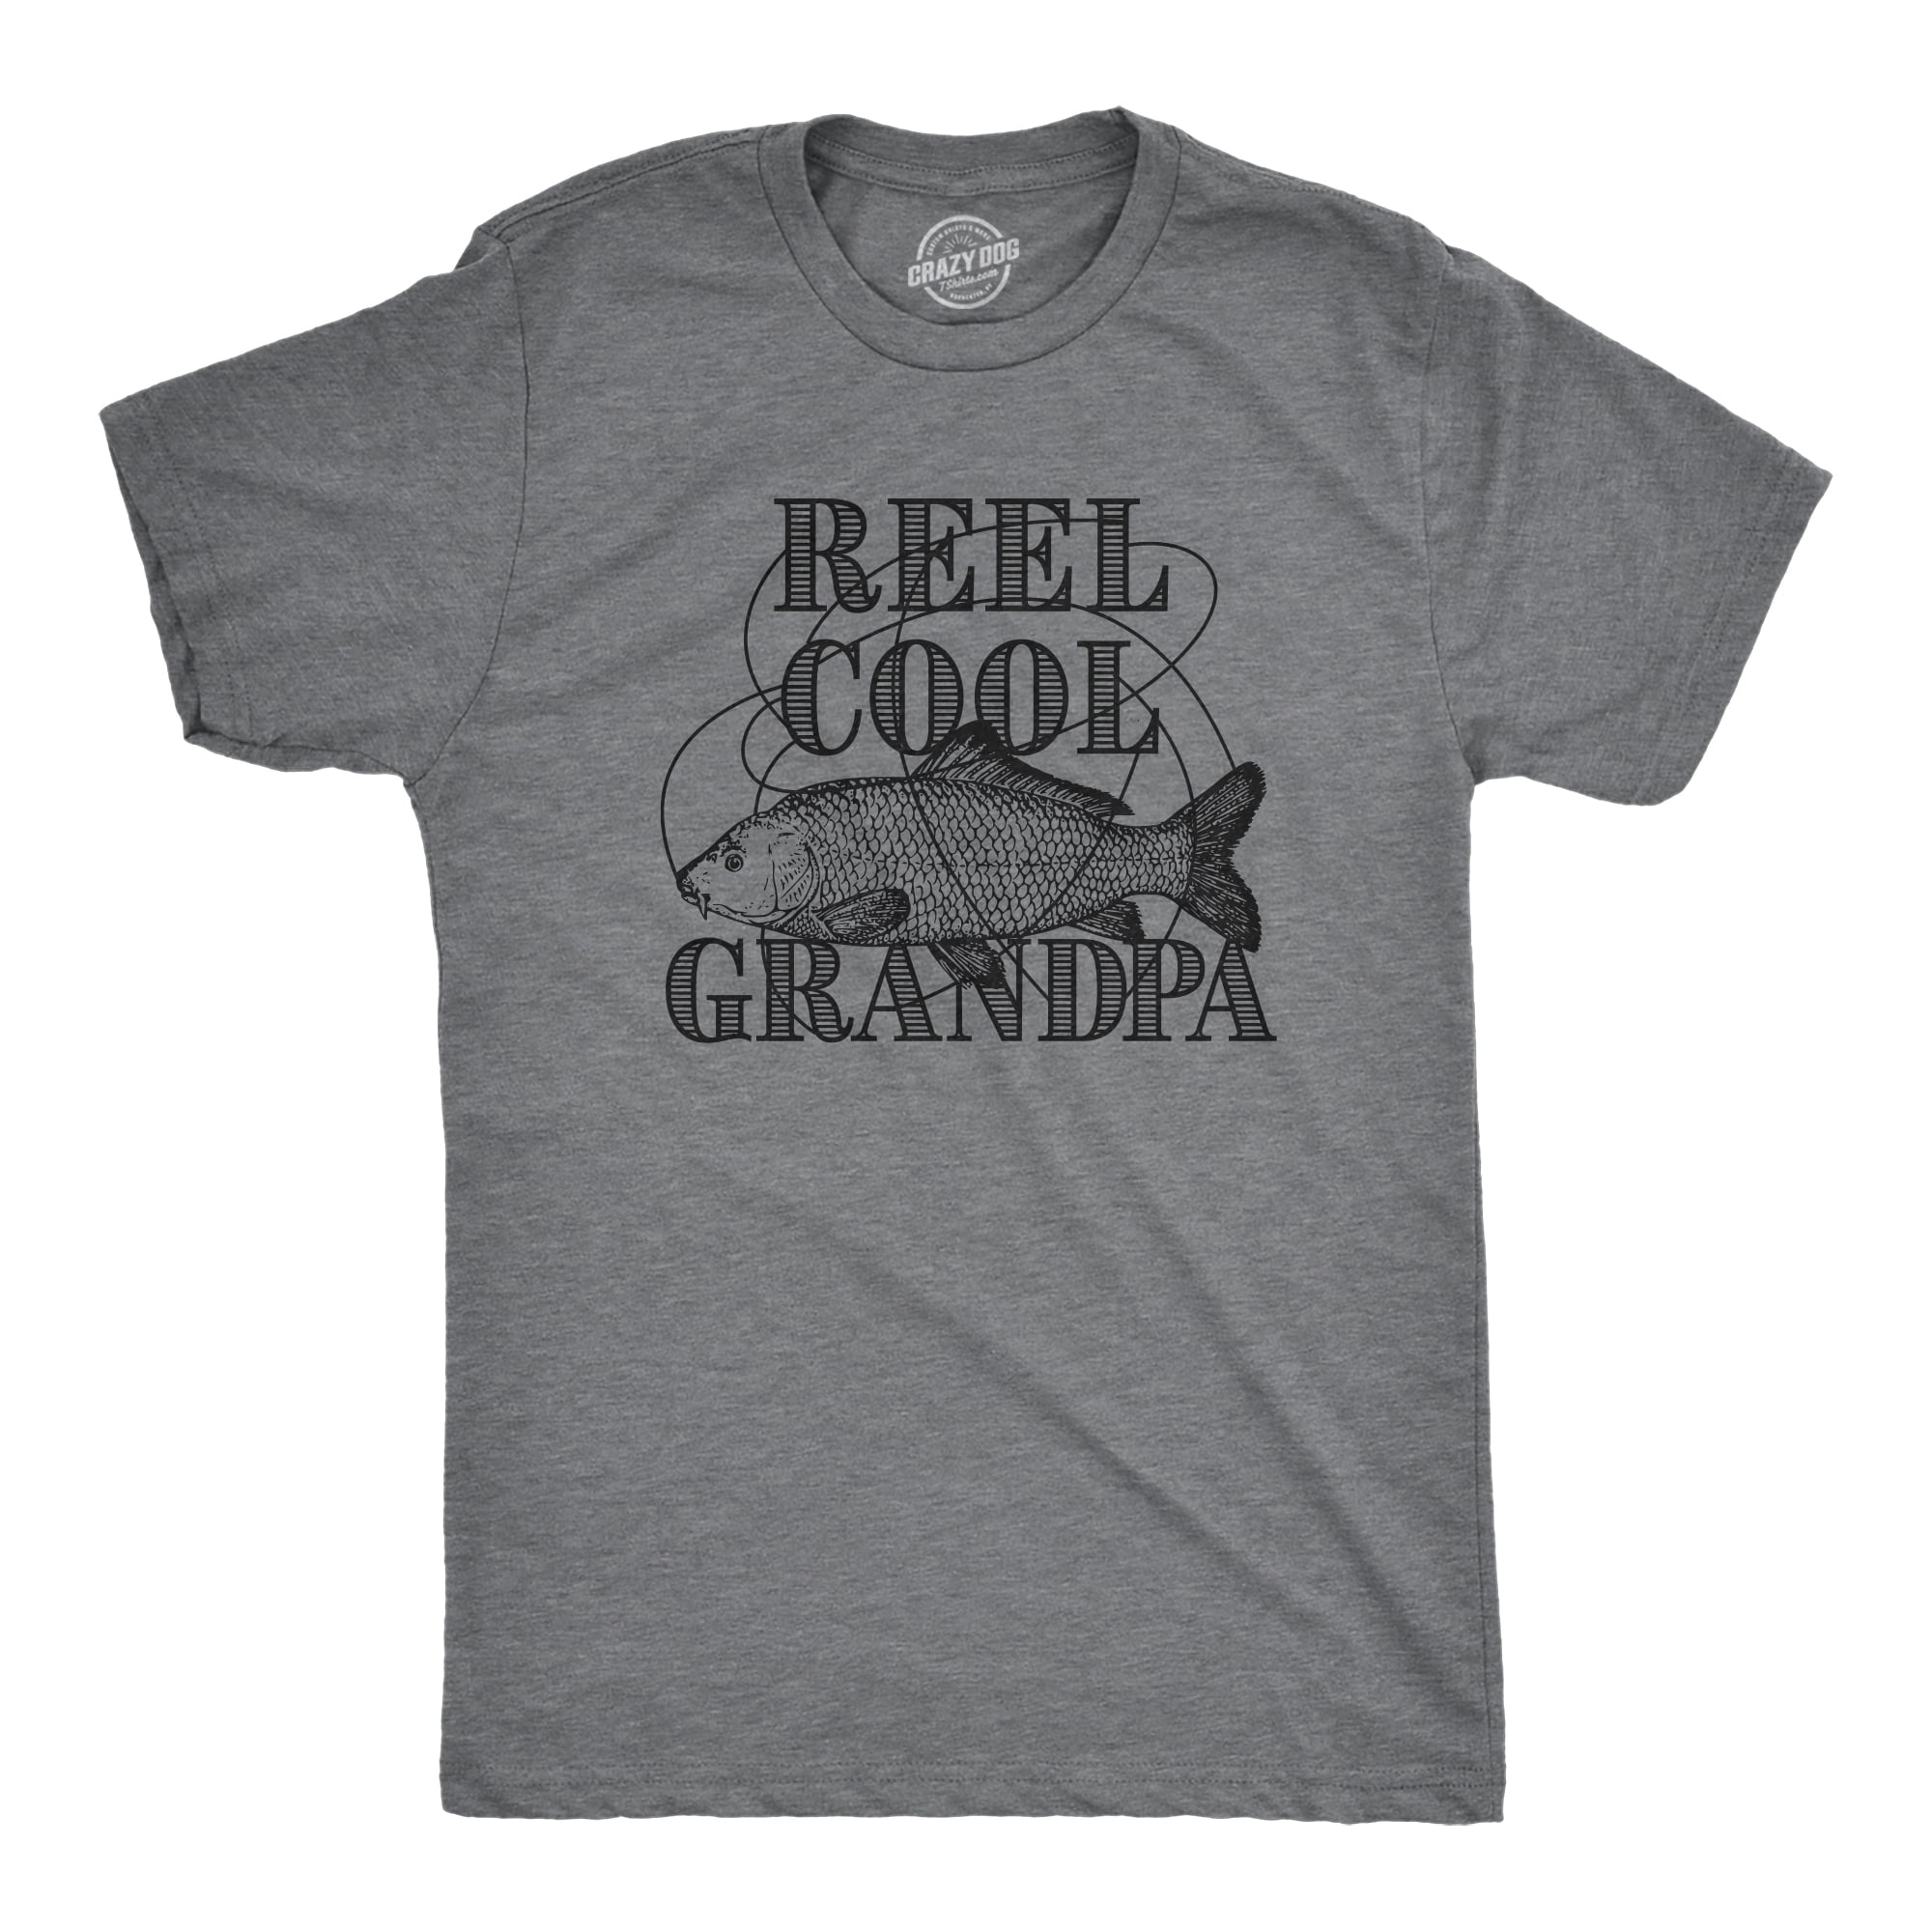 Reel cool Grandpa shirt Mens Fishing Tshirt Fishing Gift Fisherman Gifts Fishing Graphic Tee Fathers day shirt Dad Funny Angling Shirt